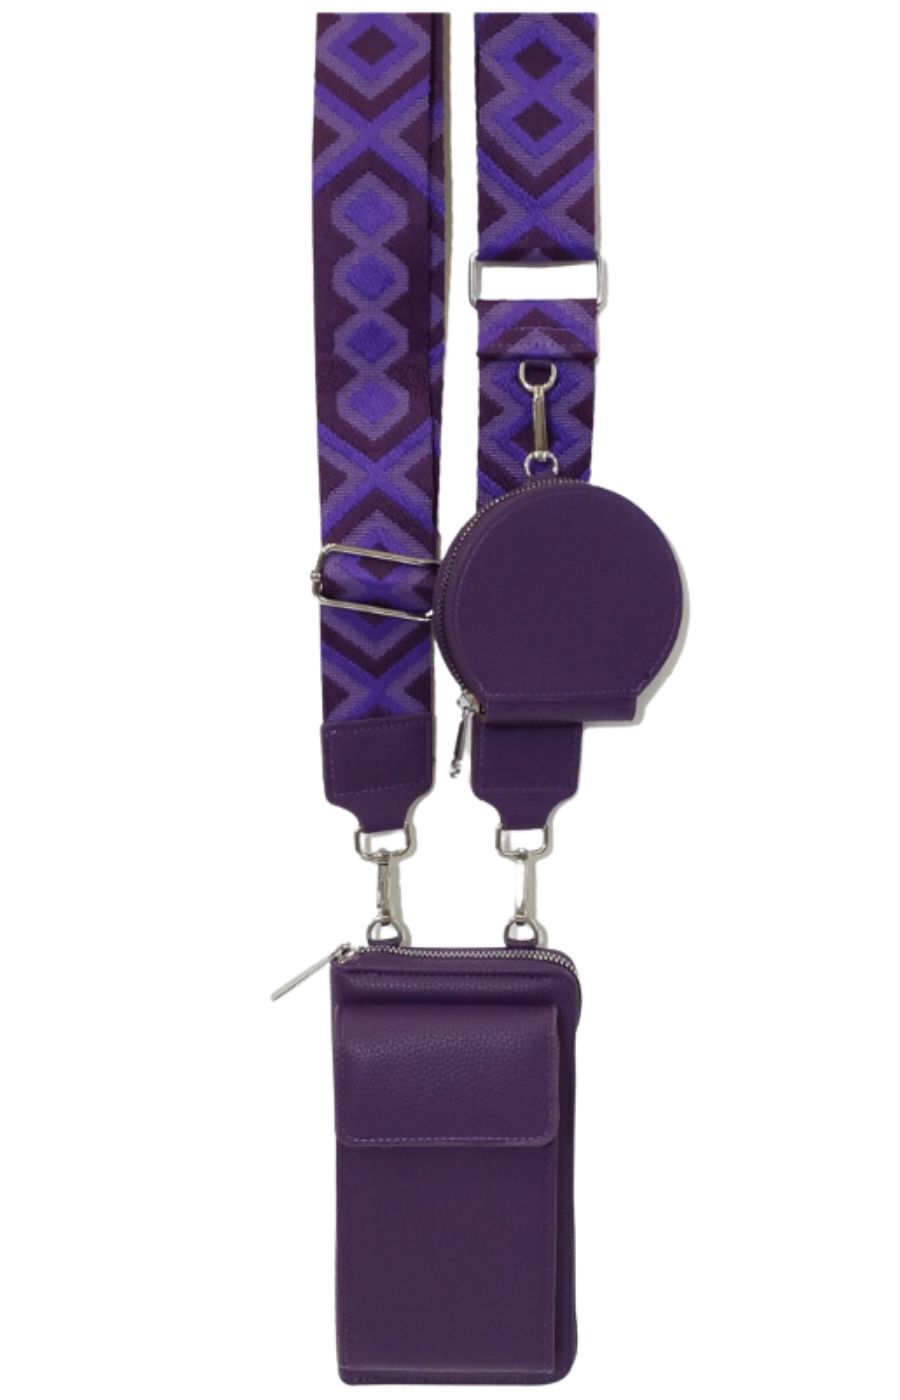 Phone Bag in Purple